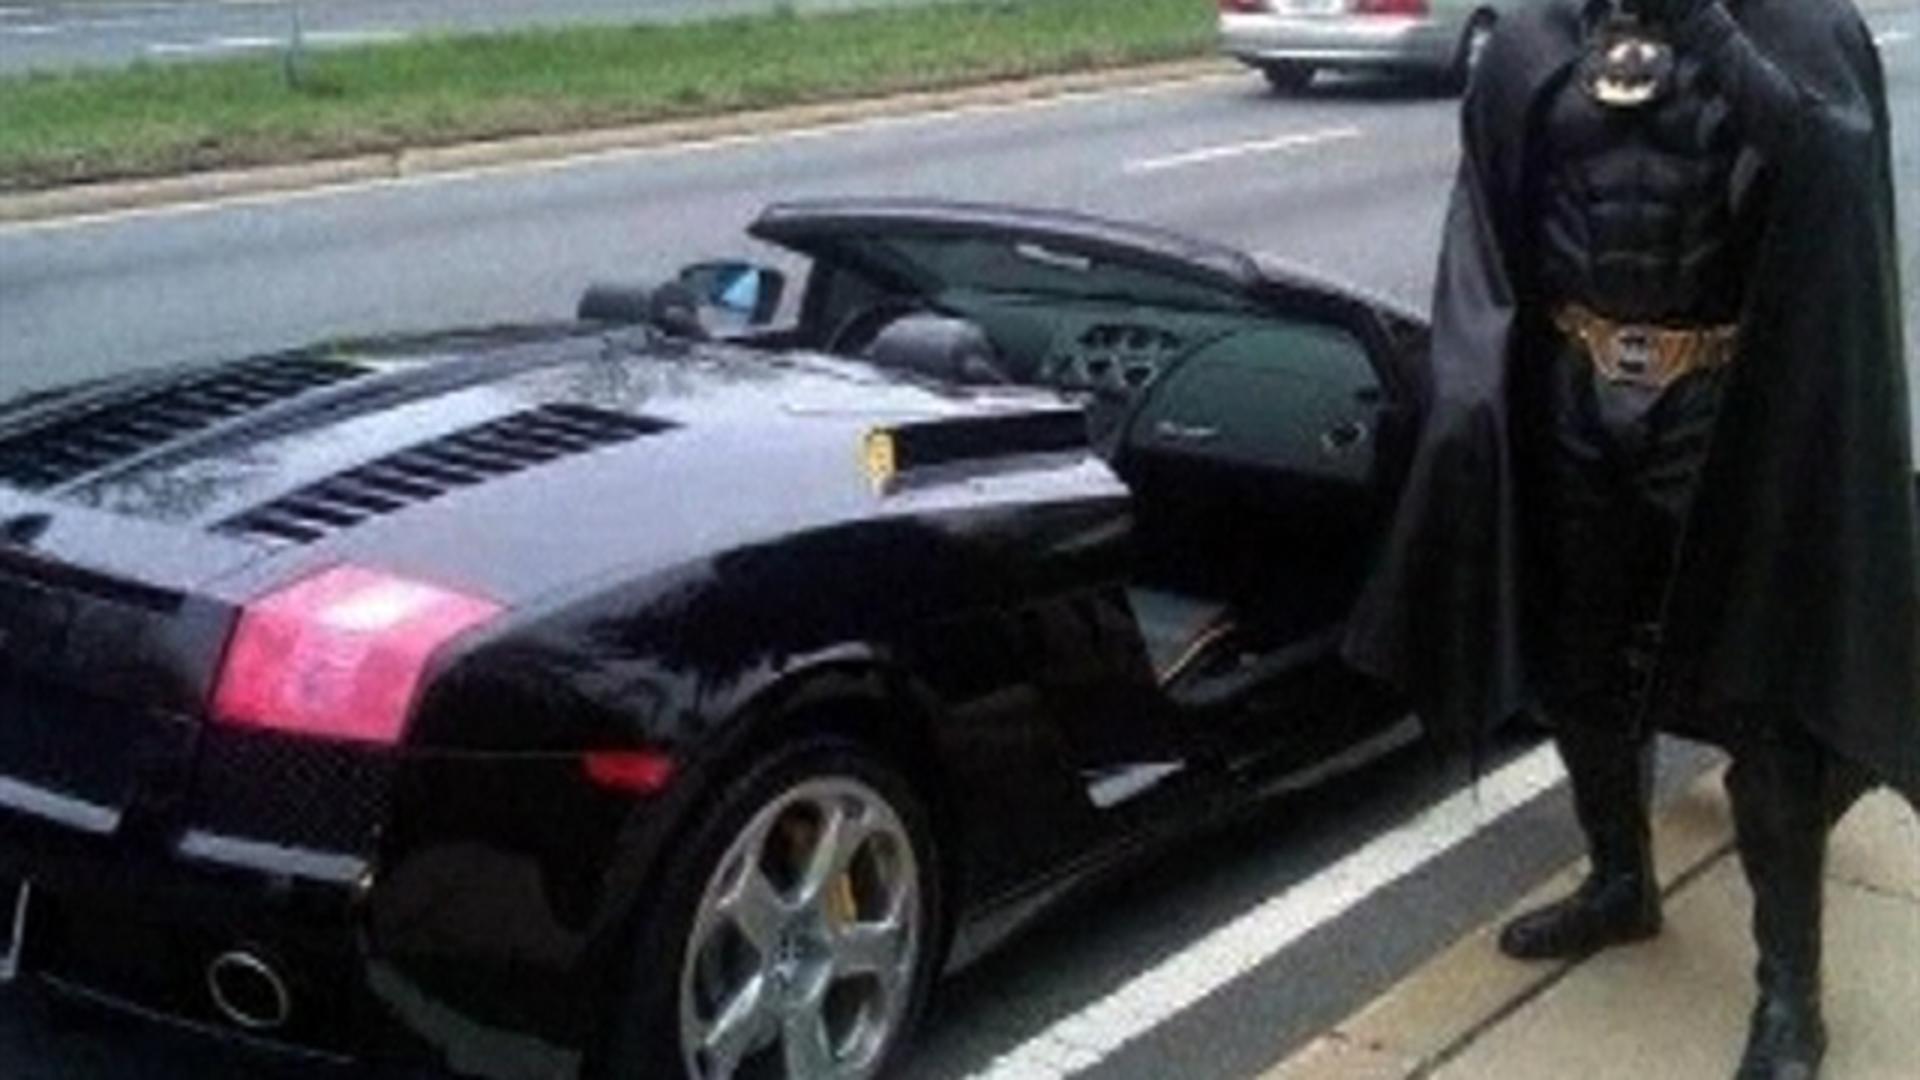 Batman pulled over in Lamborghini - CBS News